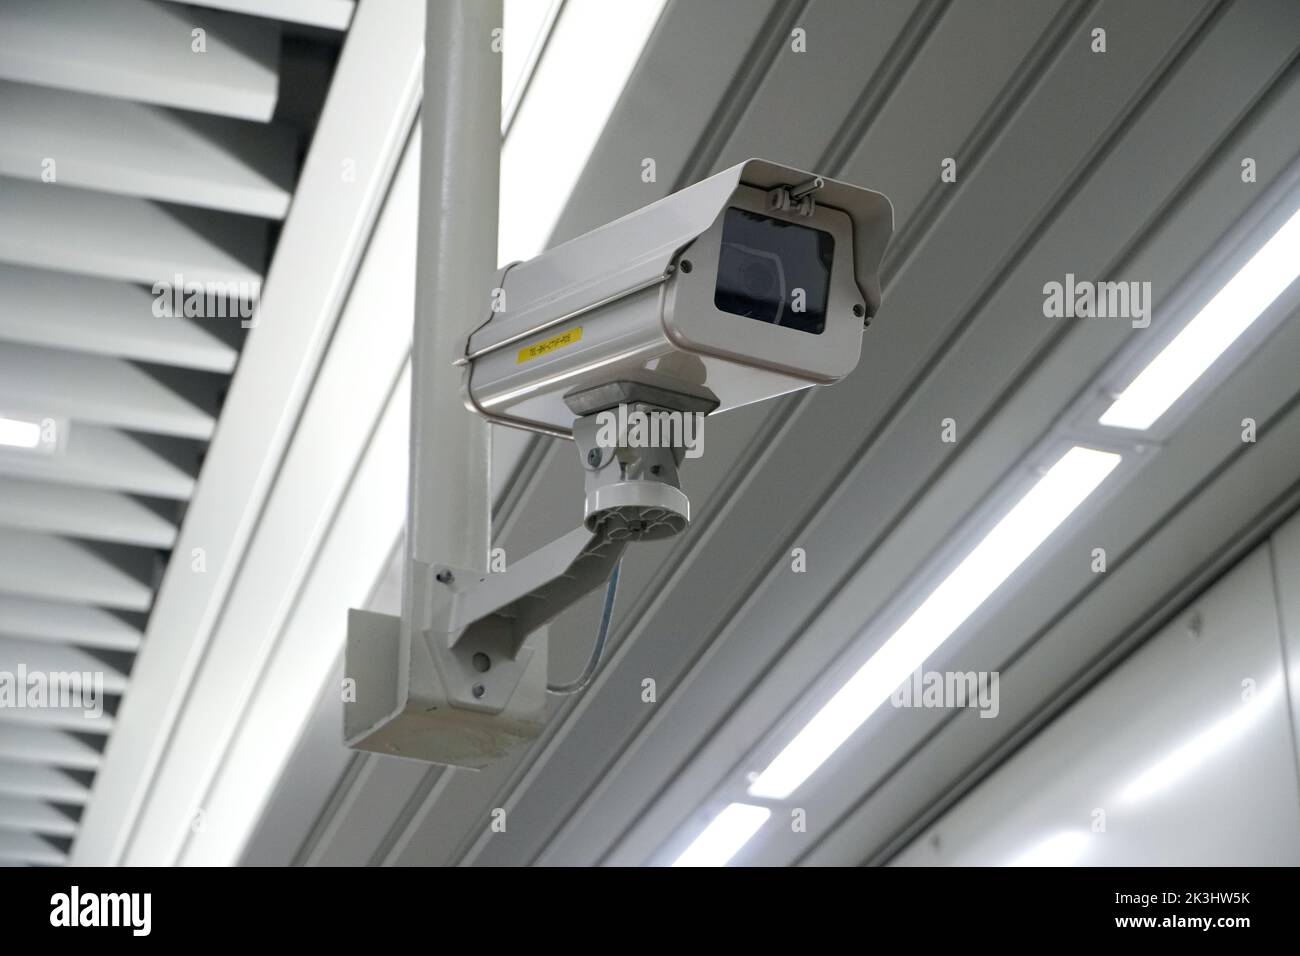 CCTV, telecamera di sicurezza a parete Foto Stock